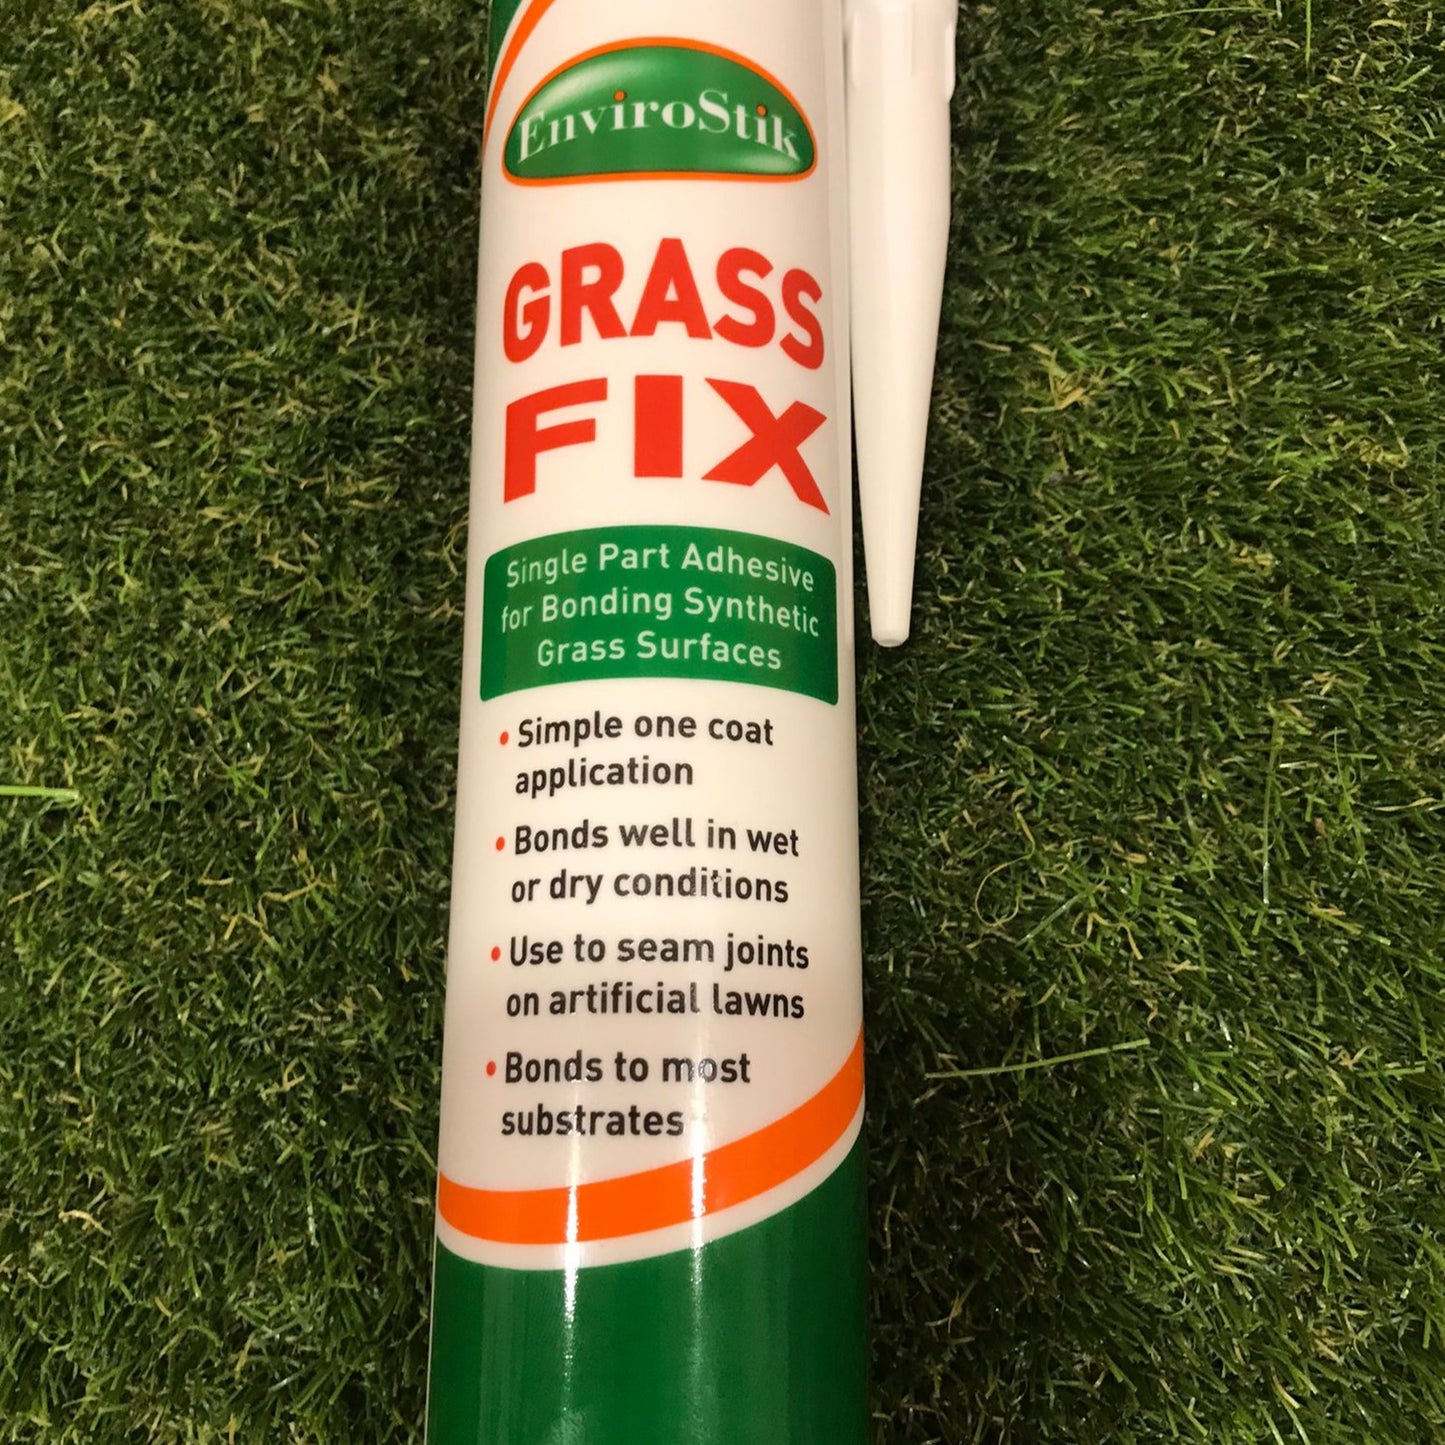 Envirostik Grass Fix 310ml Adhesive